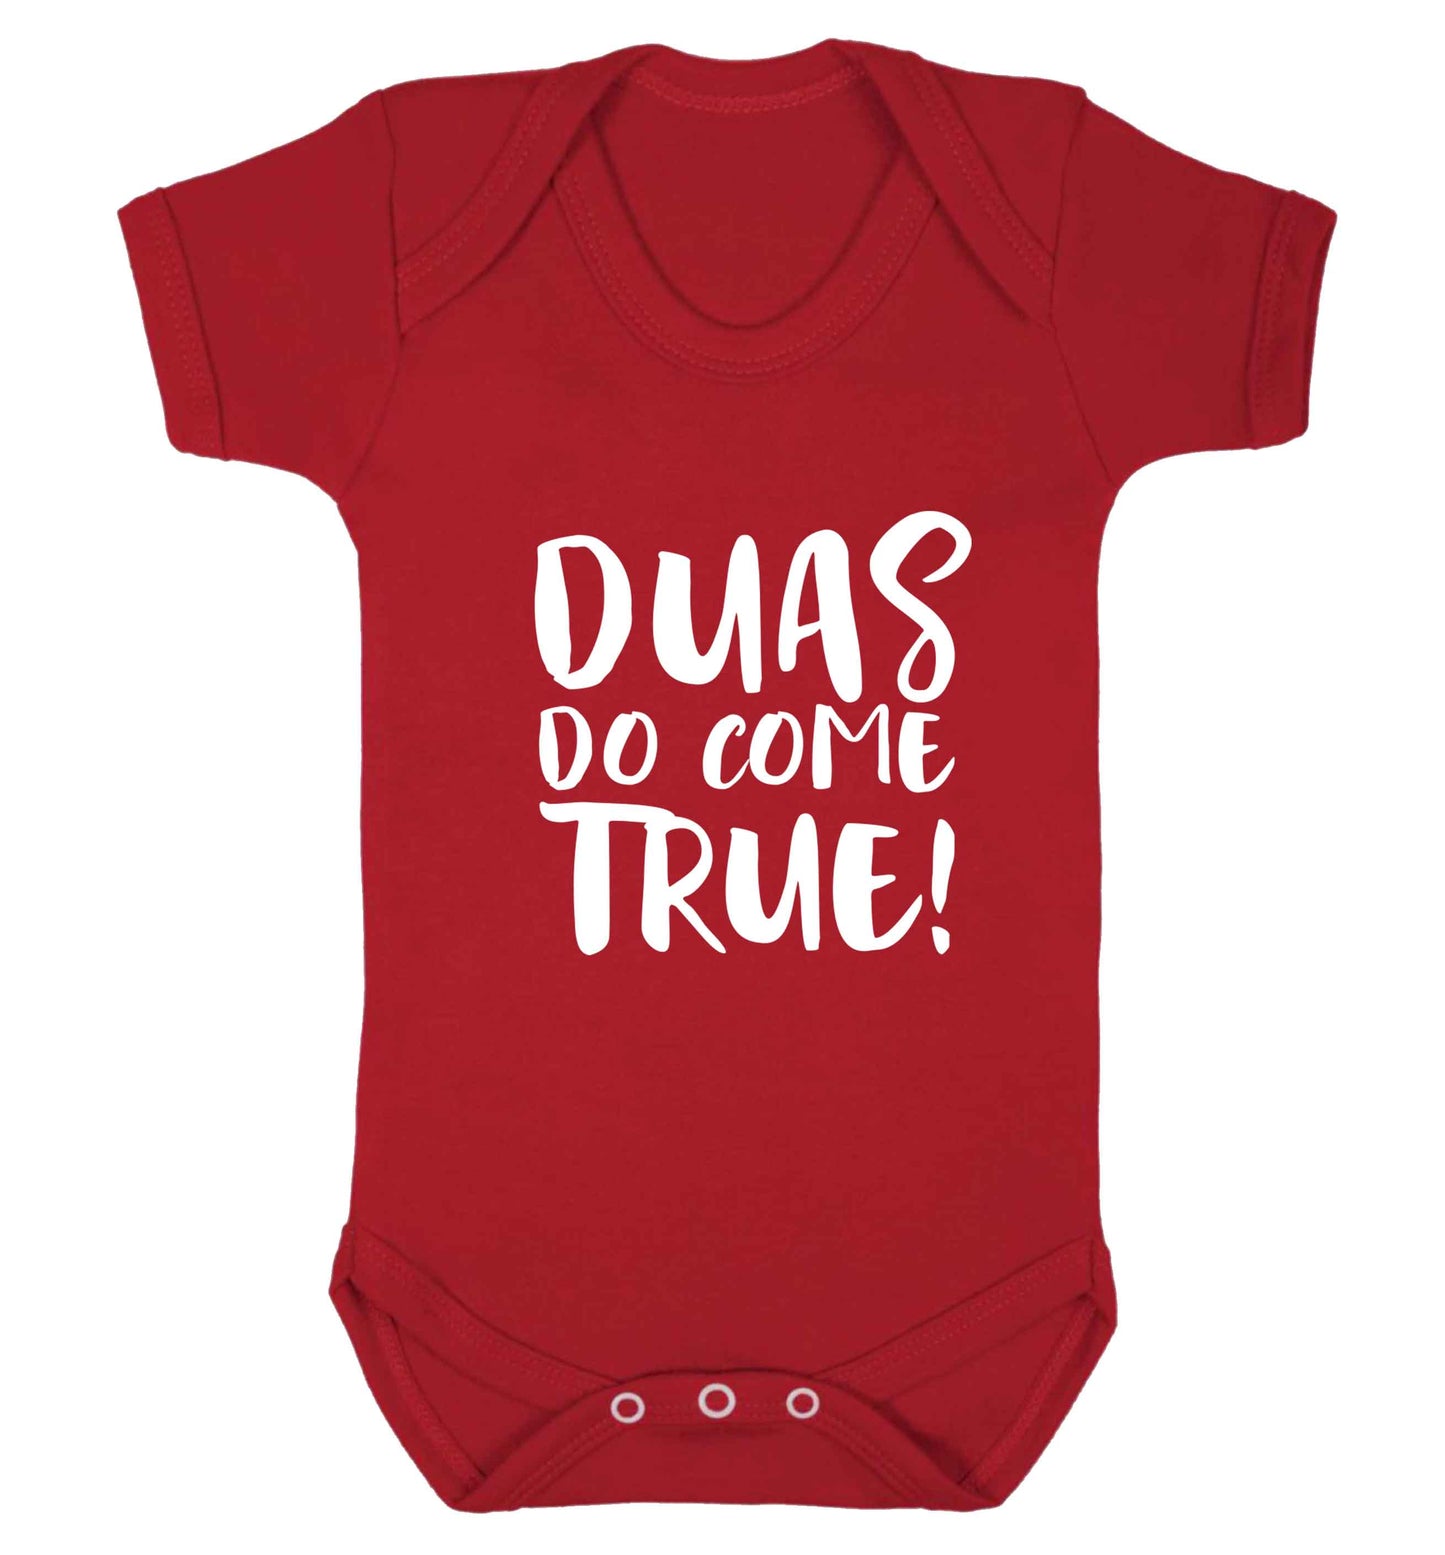 Duas do come true baby vest red 18-24 months